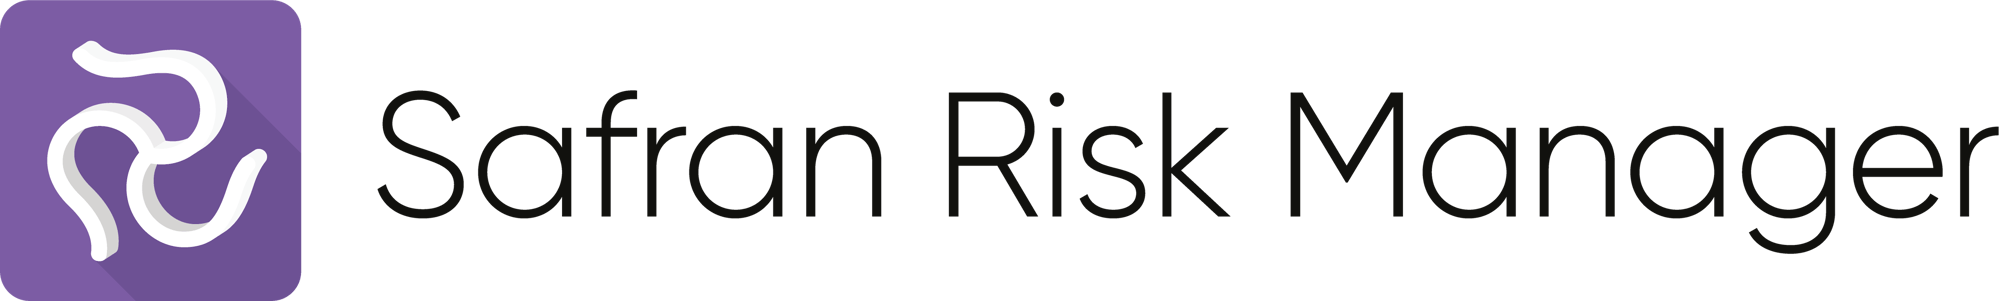 Safran Product Logos_Risk Manager